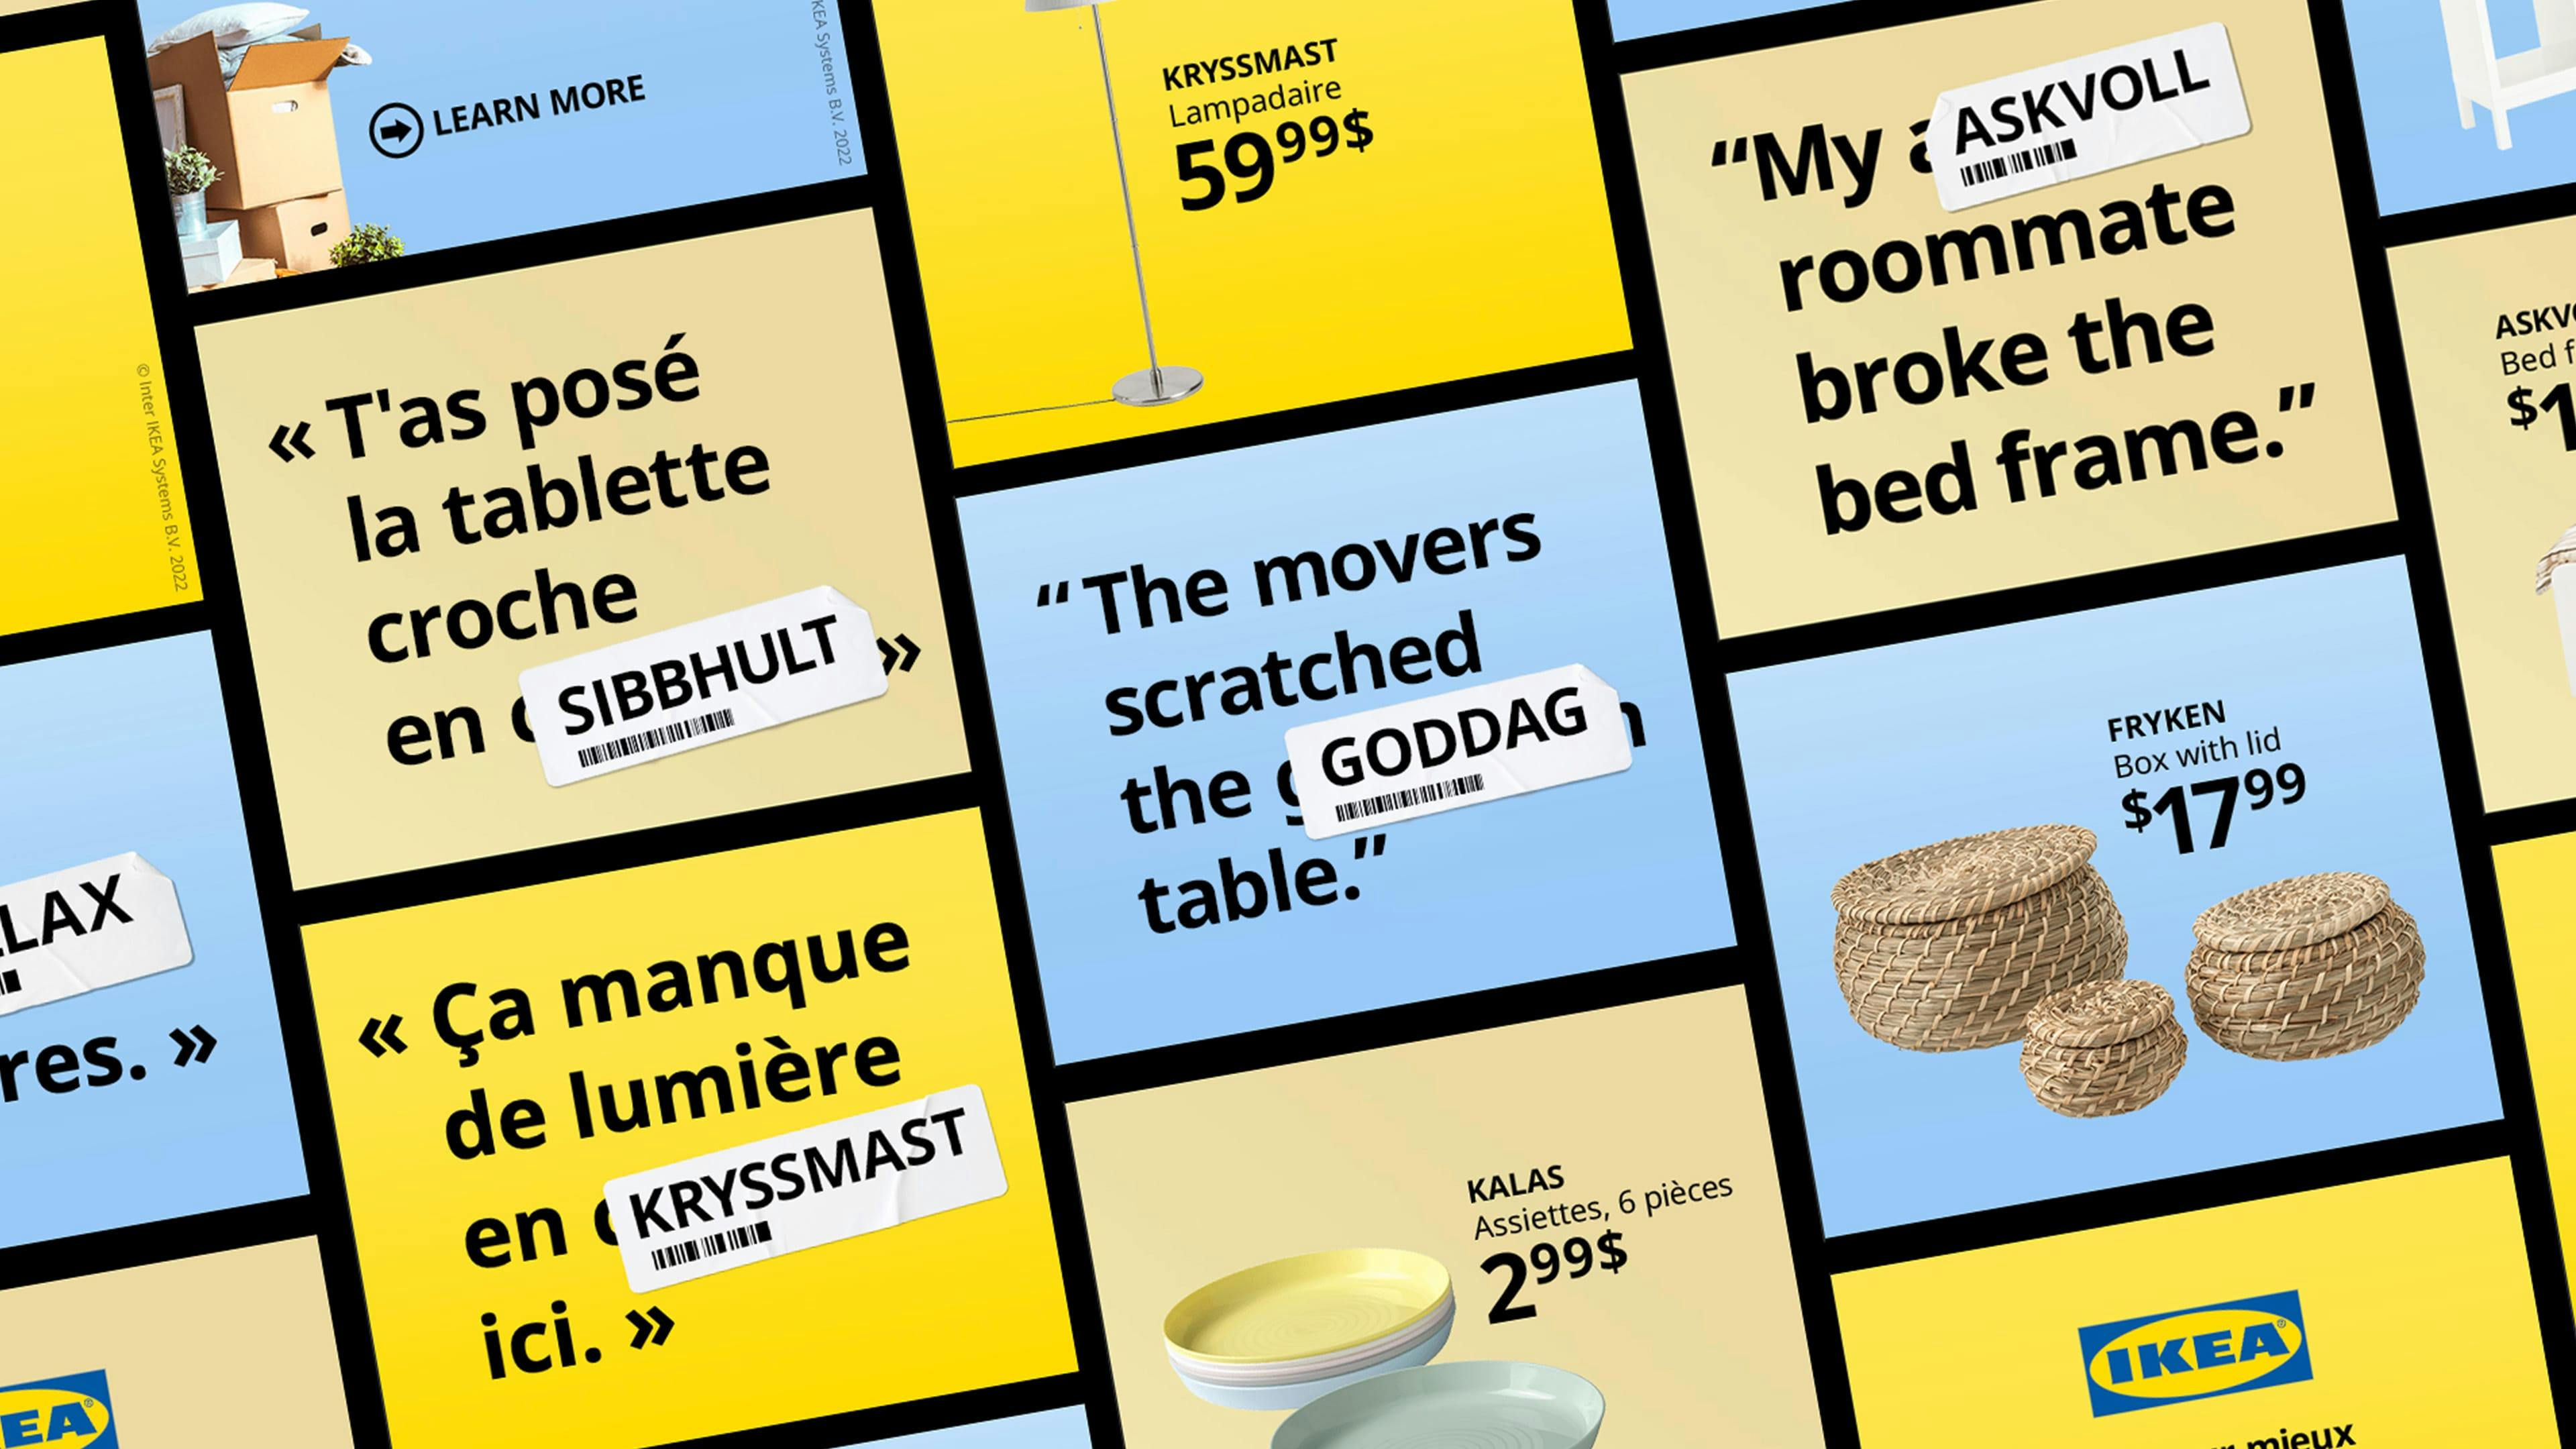 Ikea advertisement in layout